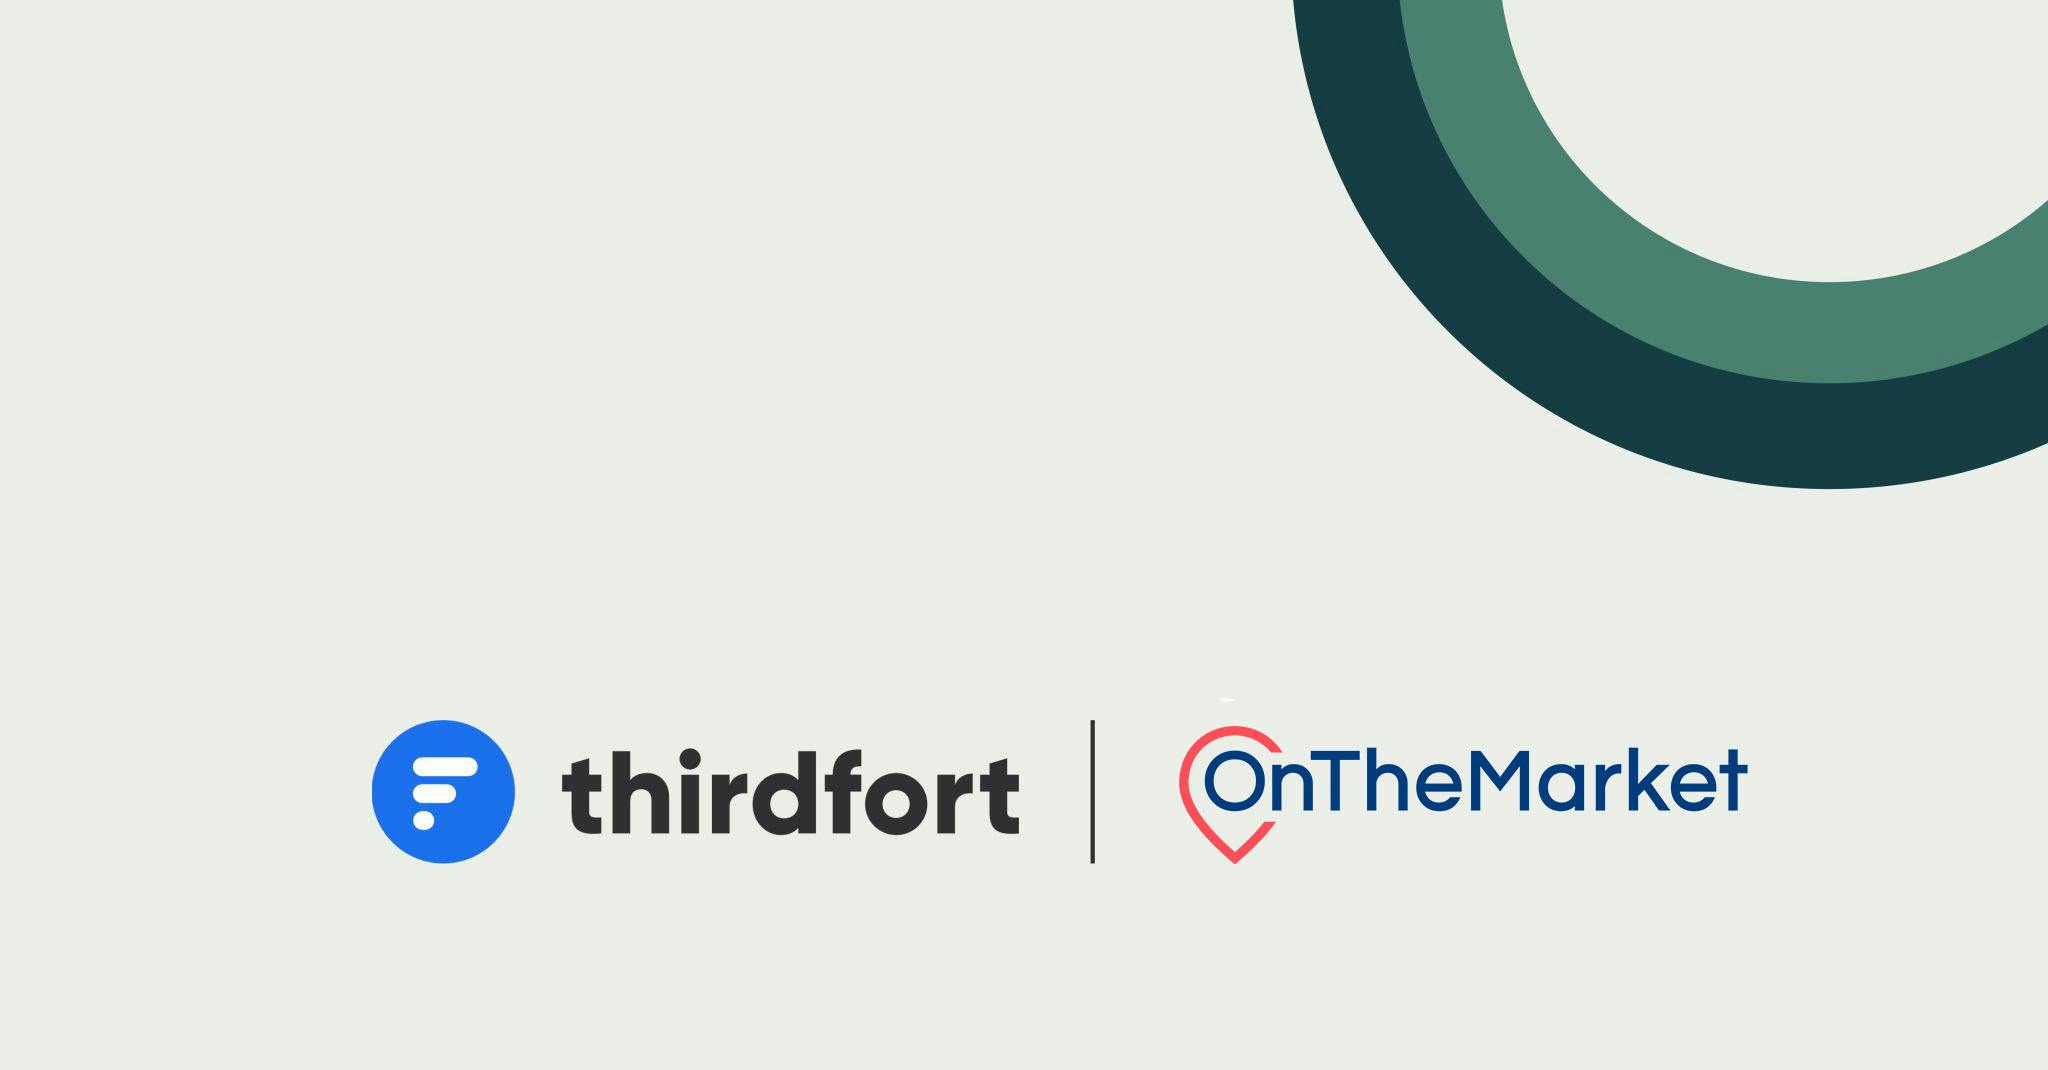 Thirdfort and OnTheMarket logos